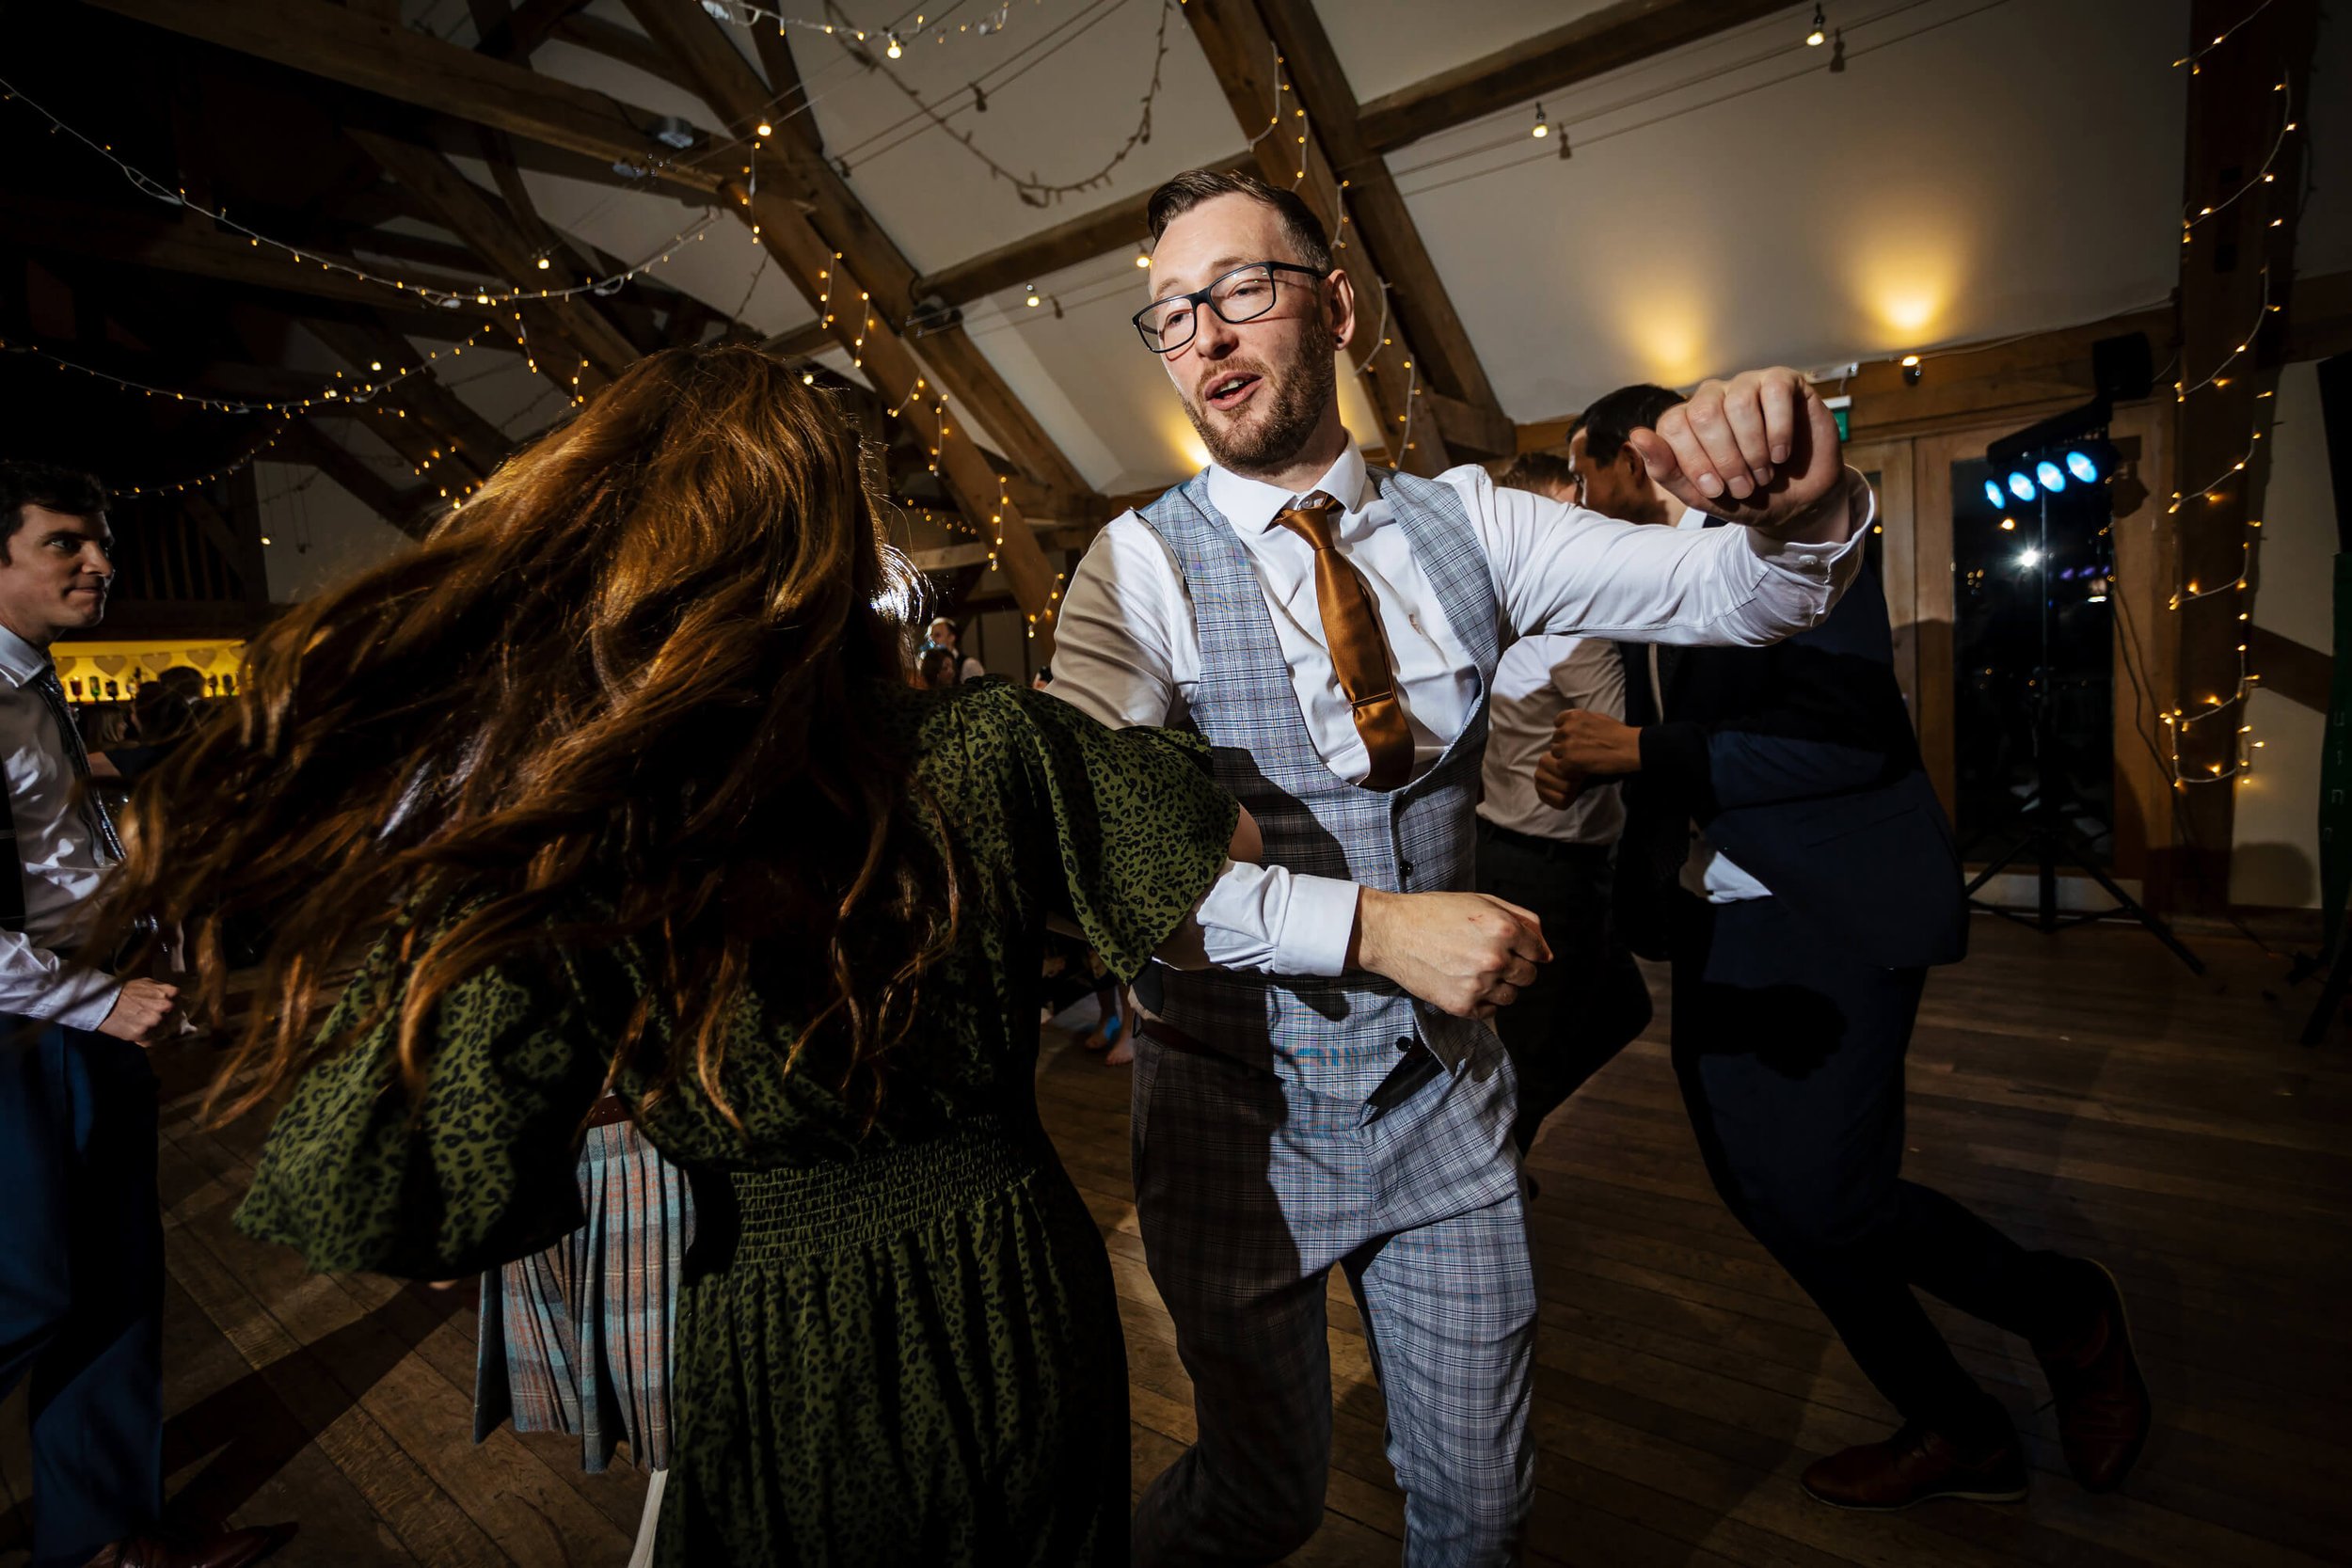 Wedding guests ceilidh dancing at Sandburn Hall